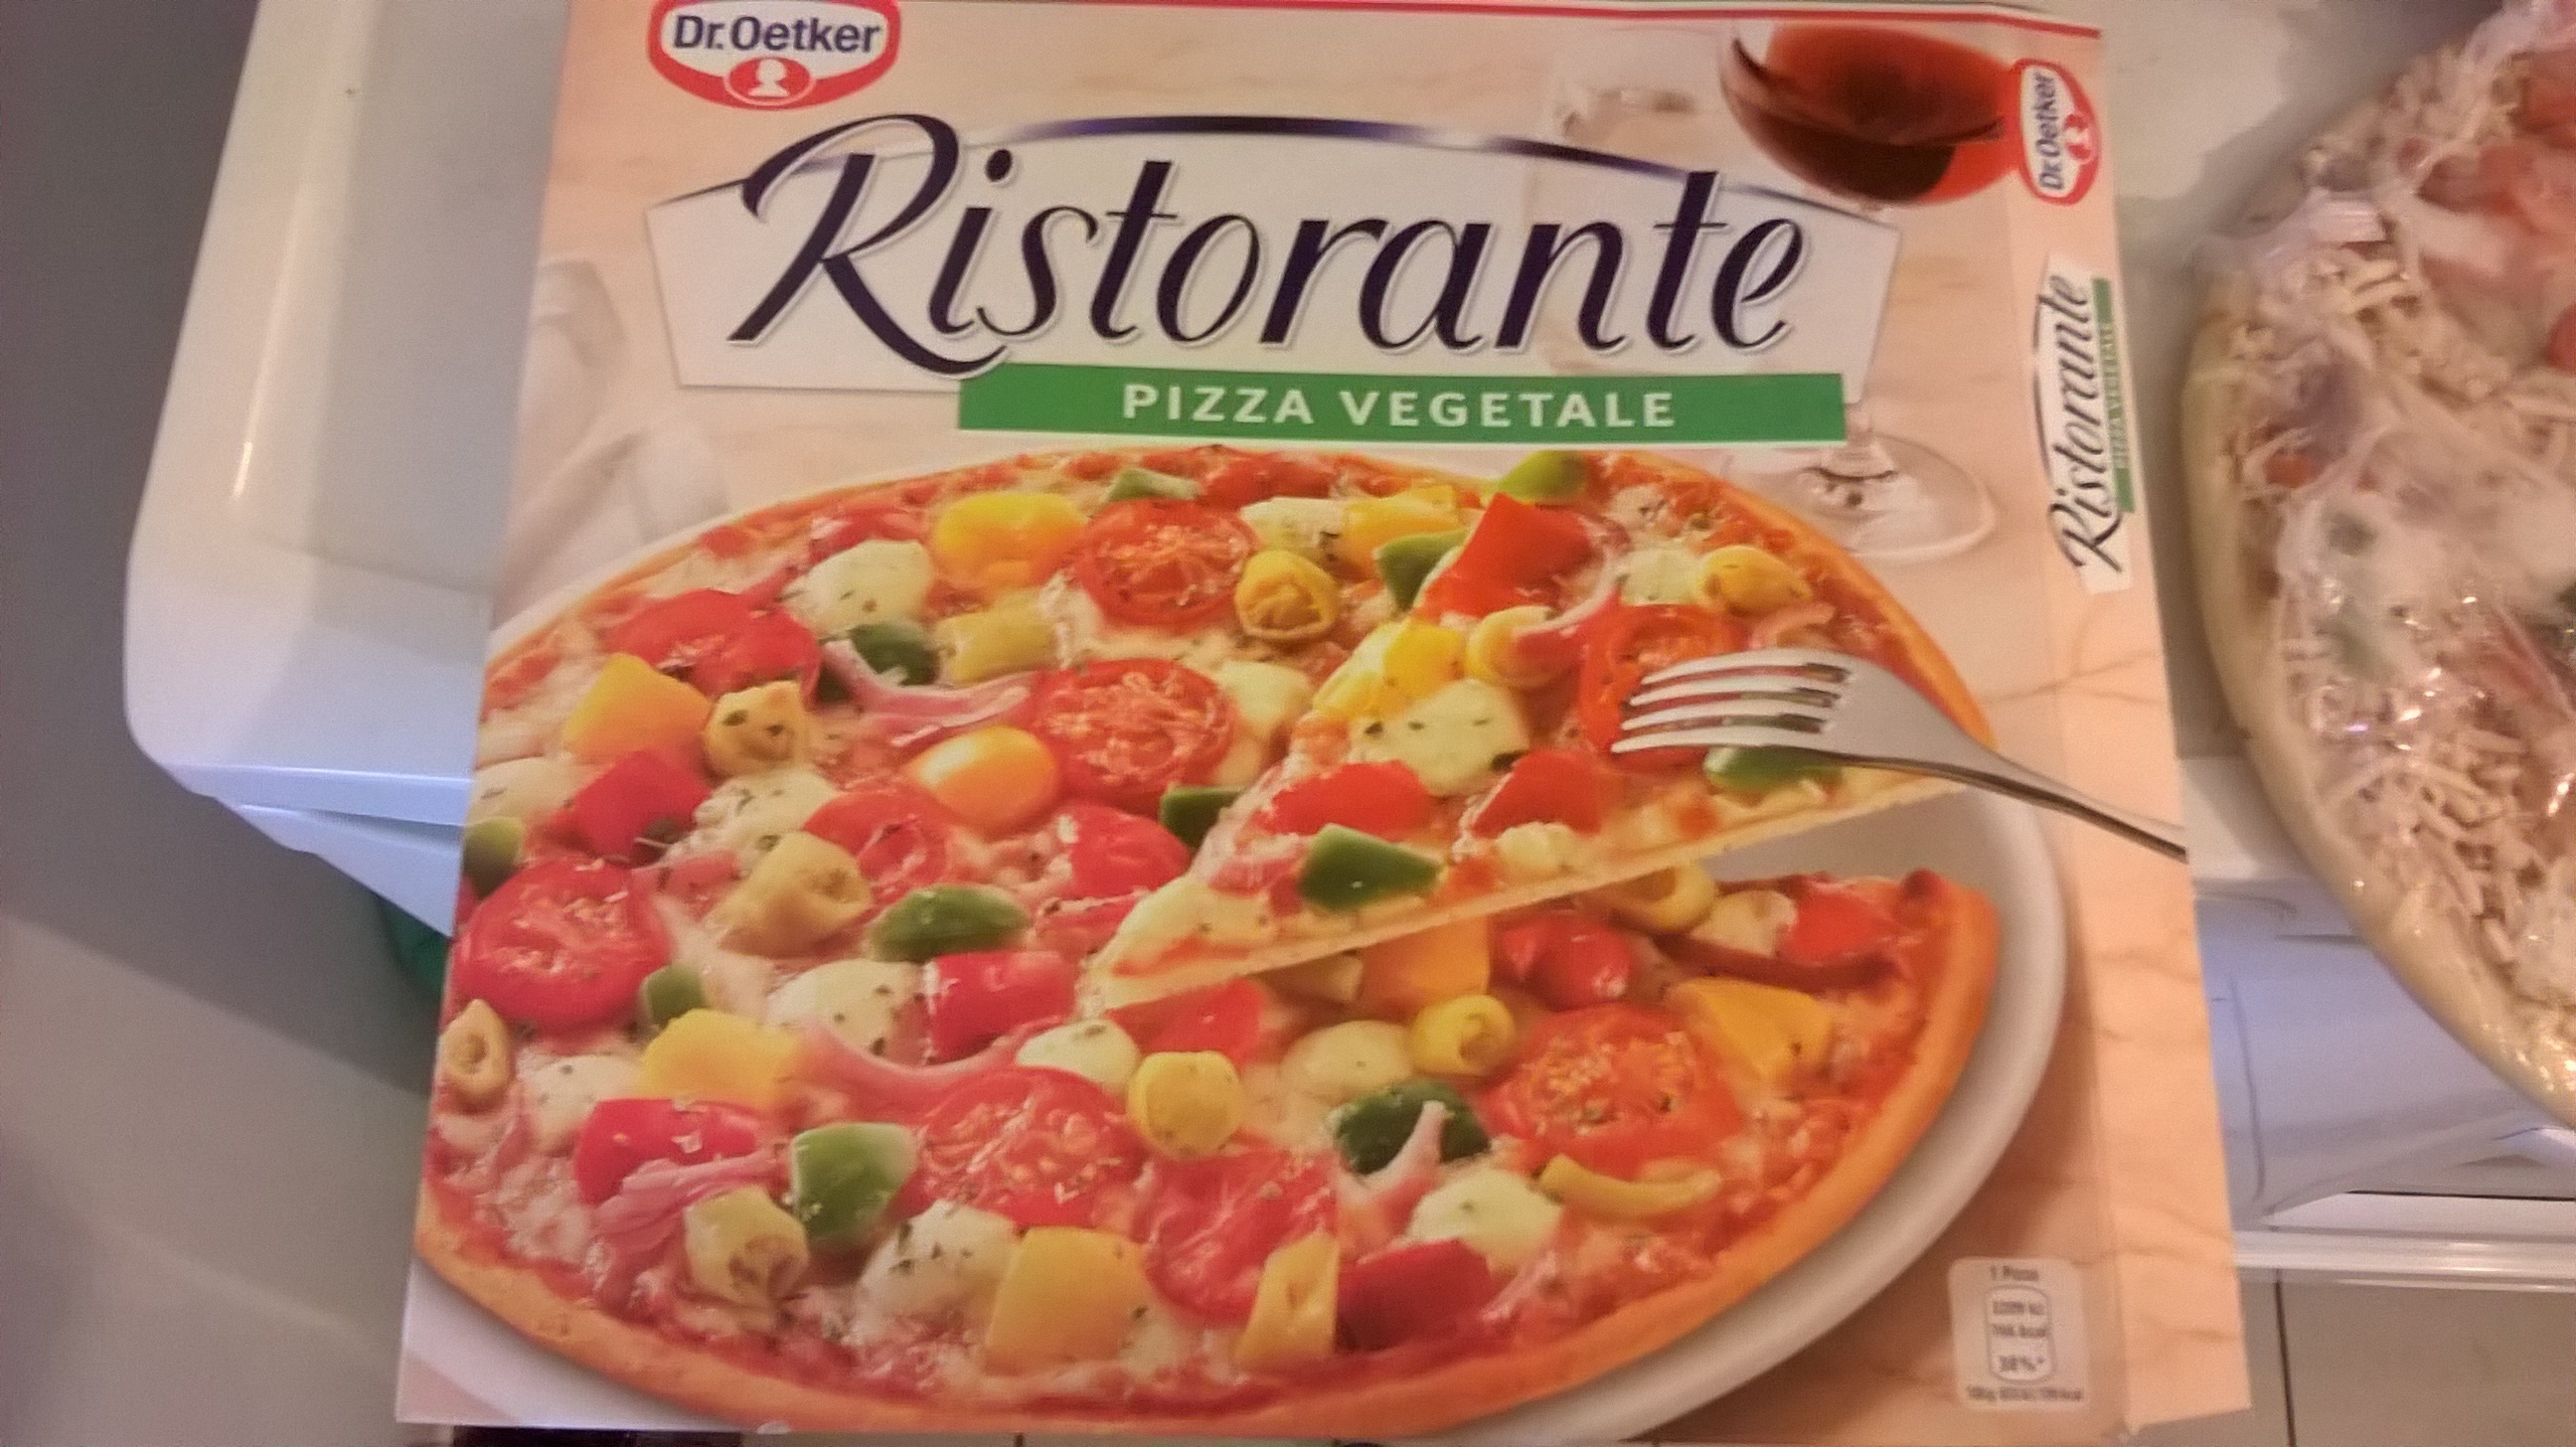 Ristorante: Pizza vegetale - Produkt